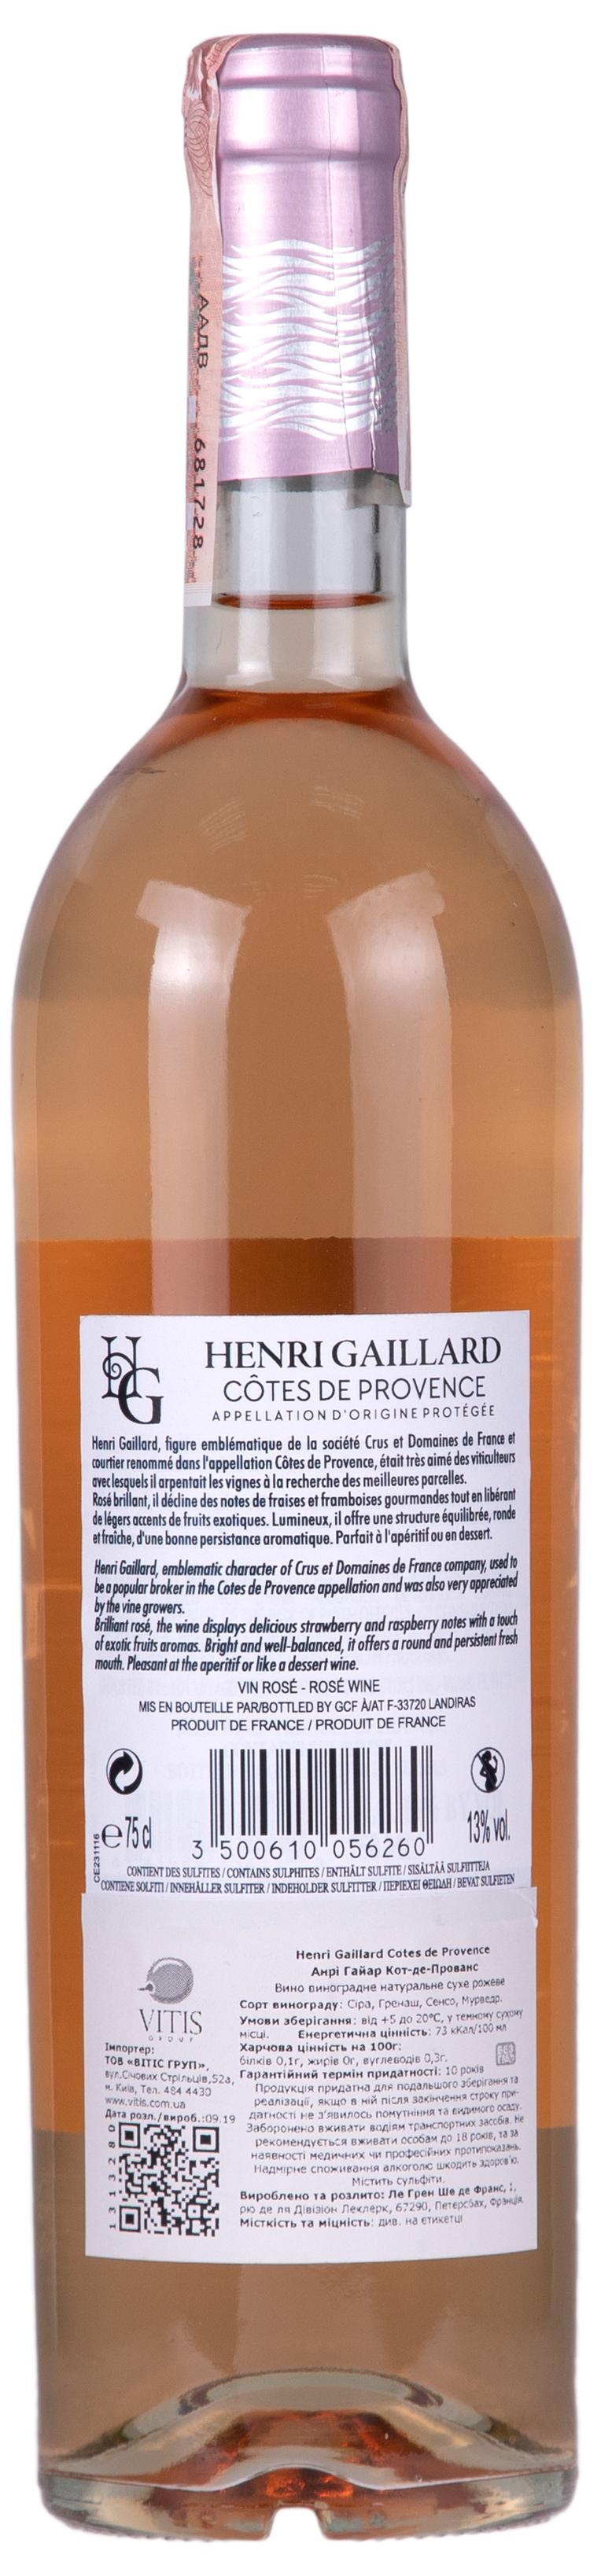 Henri Gaillard Rose Cotes de Provence 2018 Set 6 Bottles - 2